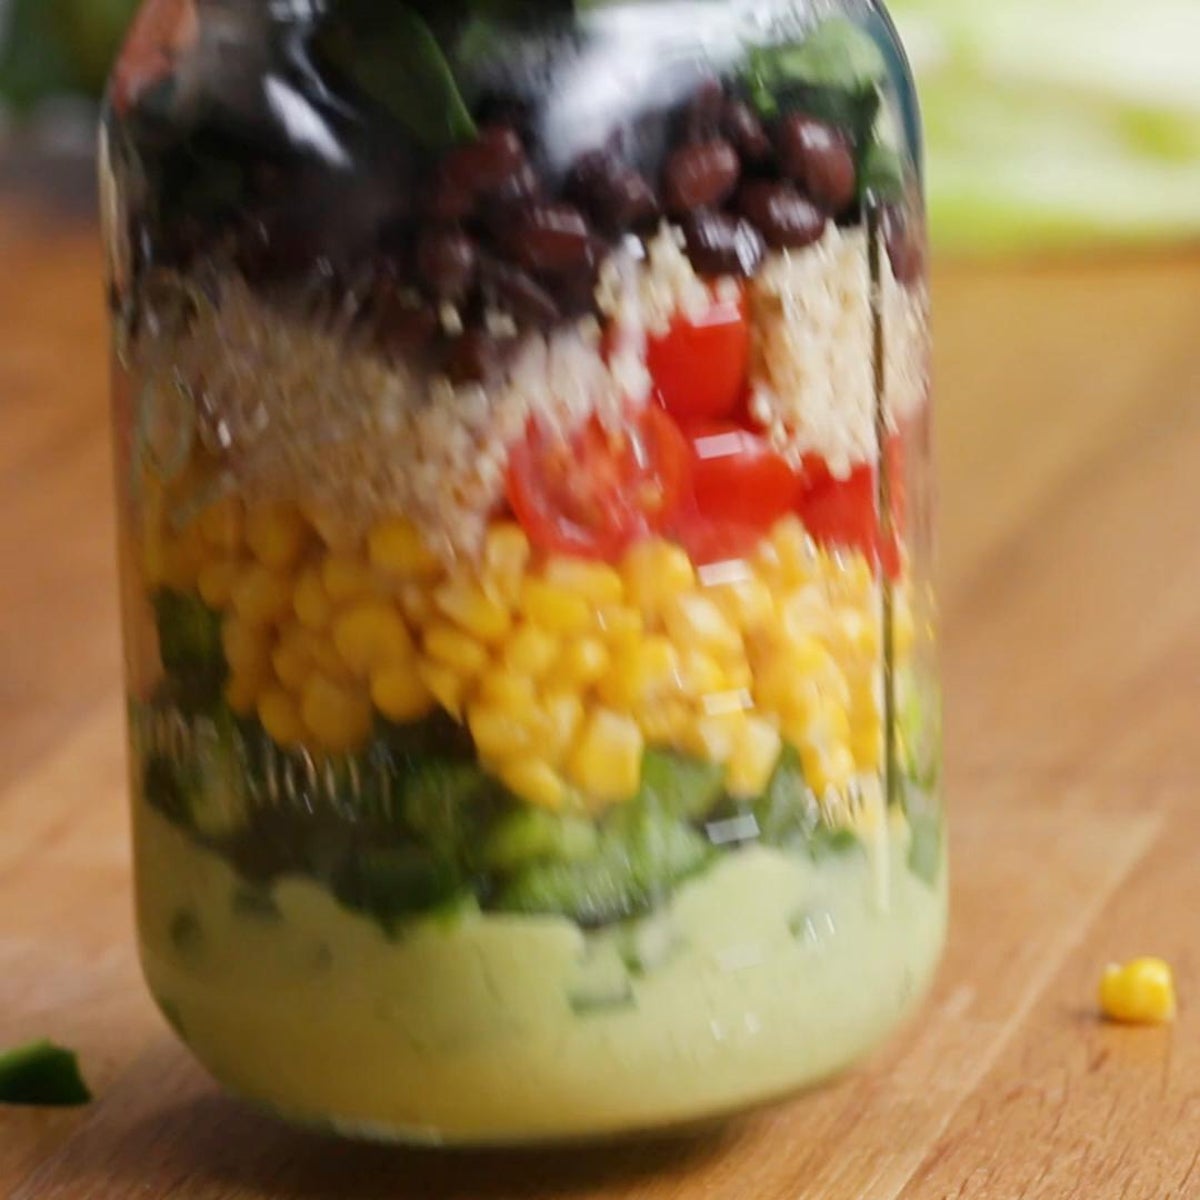 Southwestern Quinoa Mason Jar Salads - Making Thyme for Health